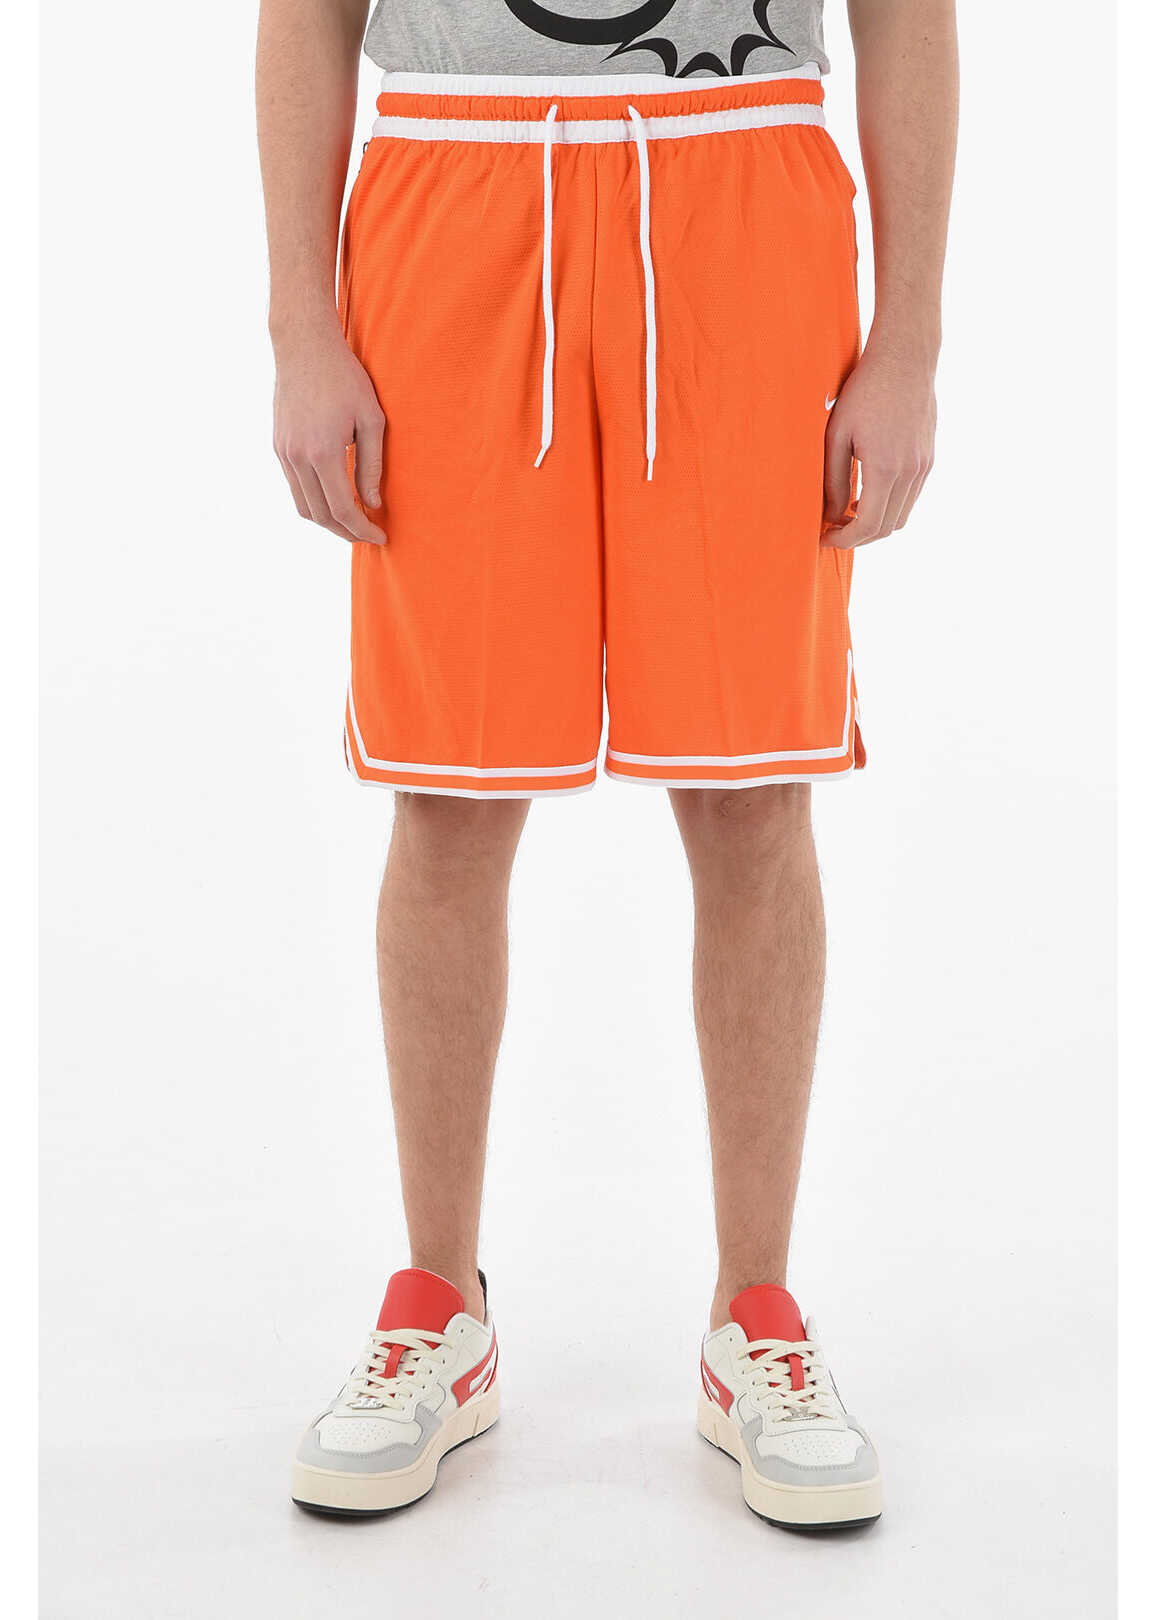 Nike Contrasting Bands Loose Fit Shorts Orange